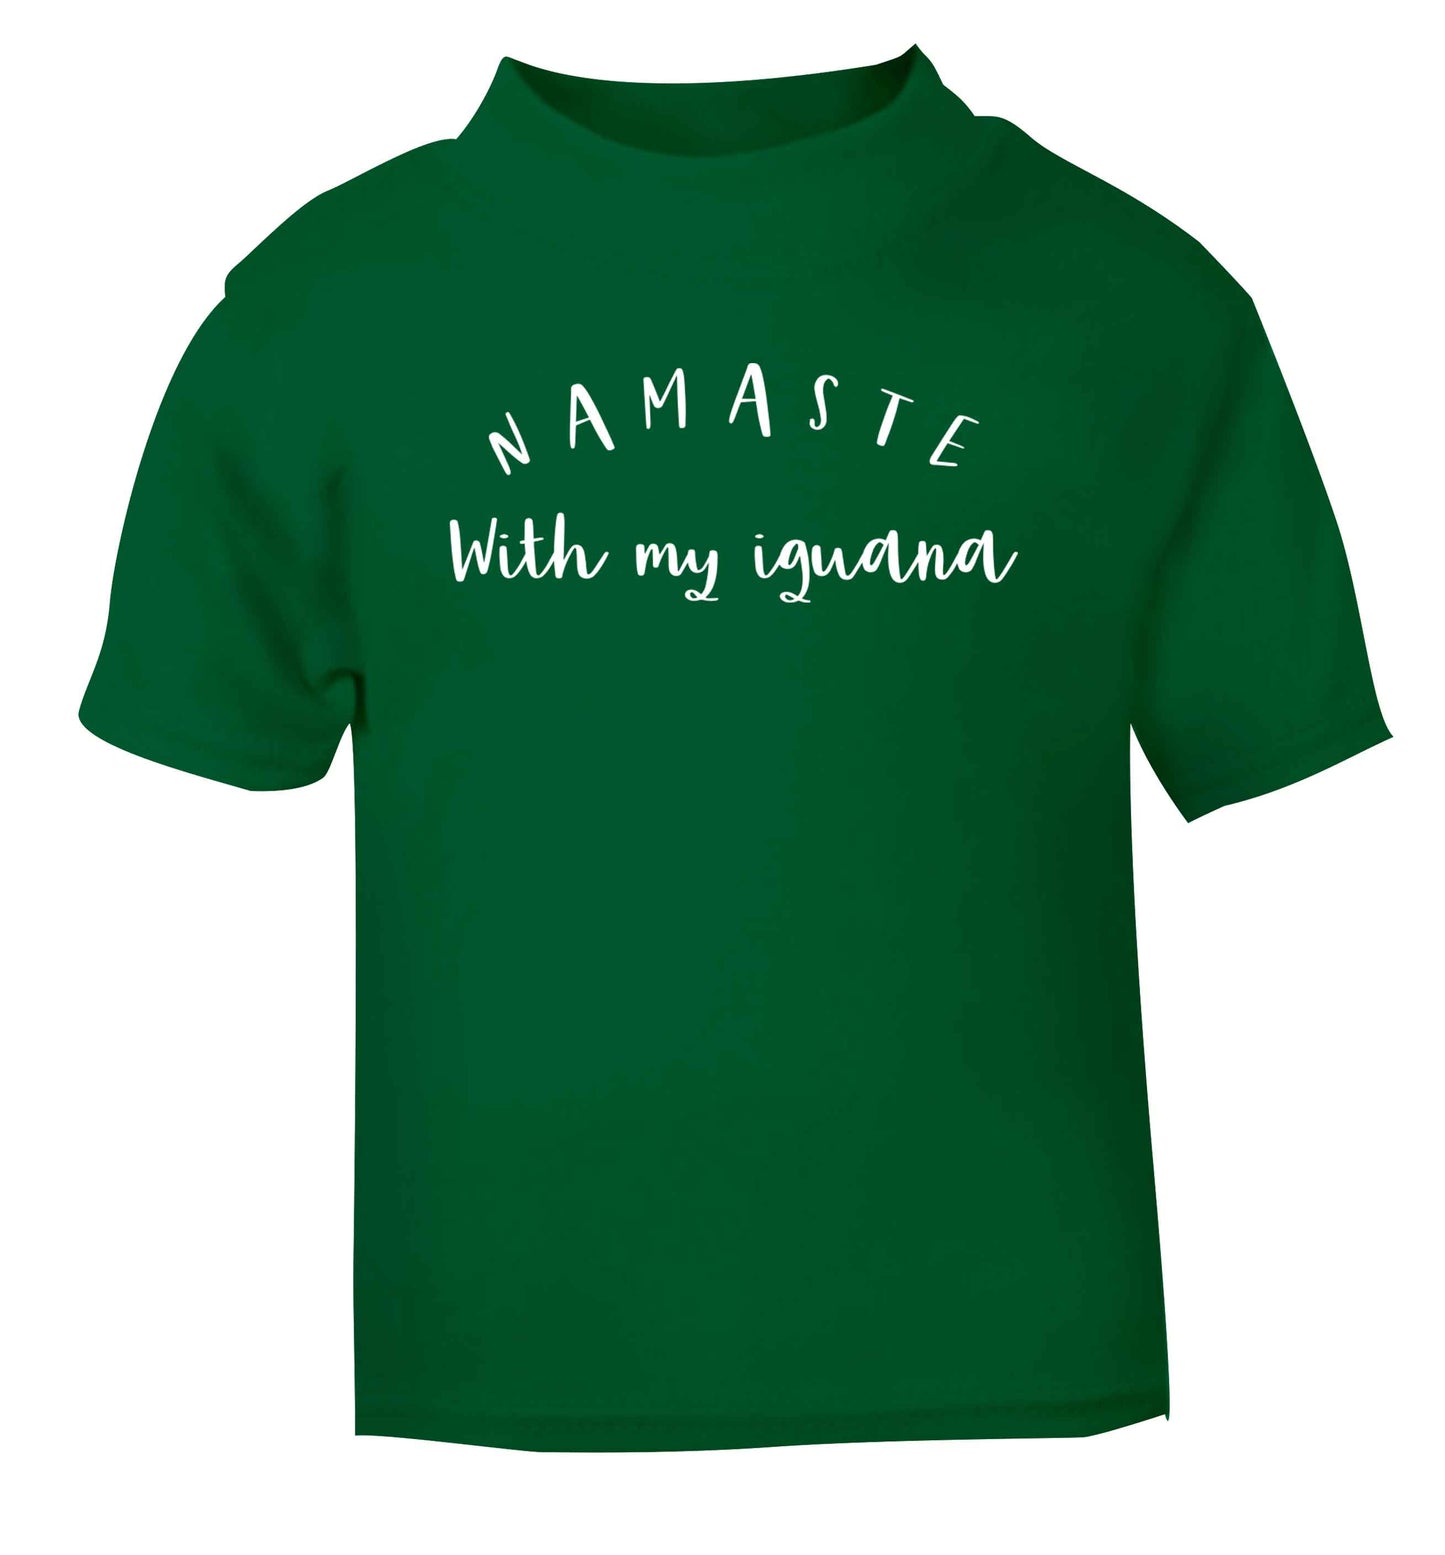 Namaste with my iguana green Baby Toddler Tshirt 2 Years